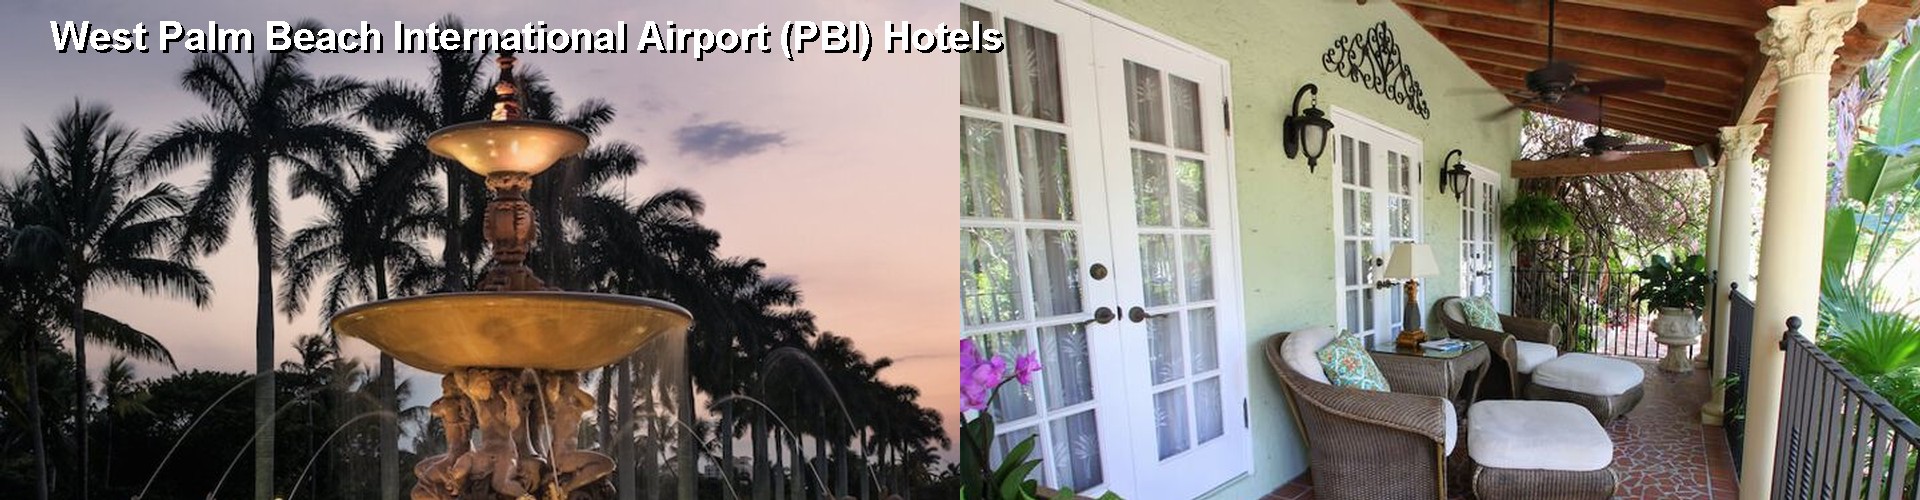 4 Best Hotels near West Palm Beach International Airport (PBI)